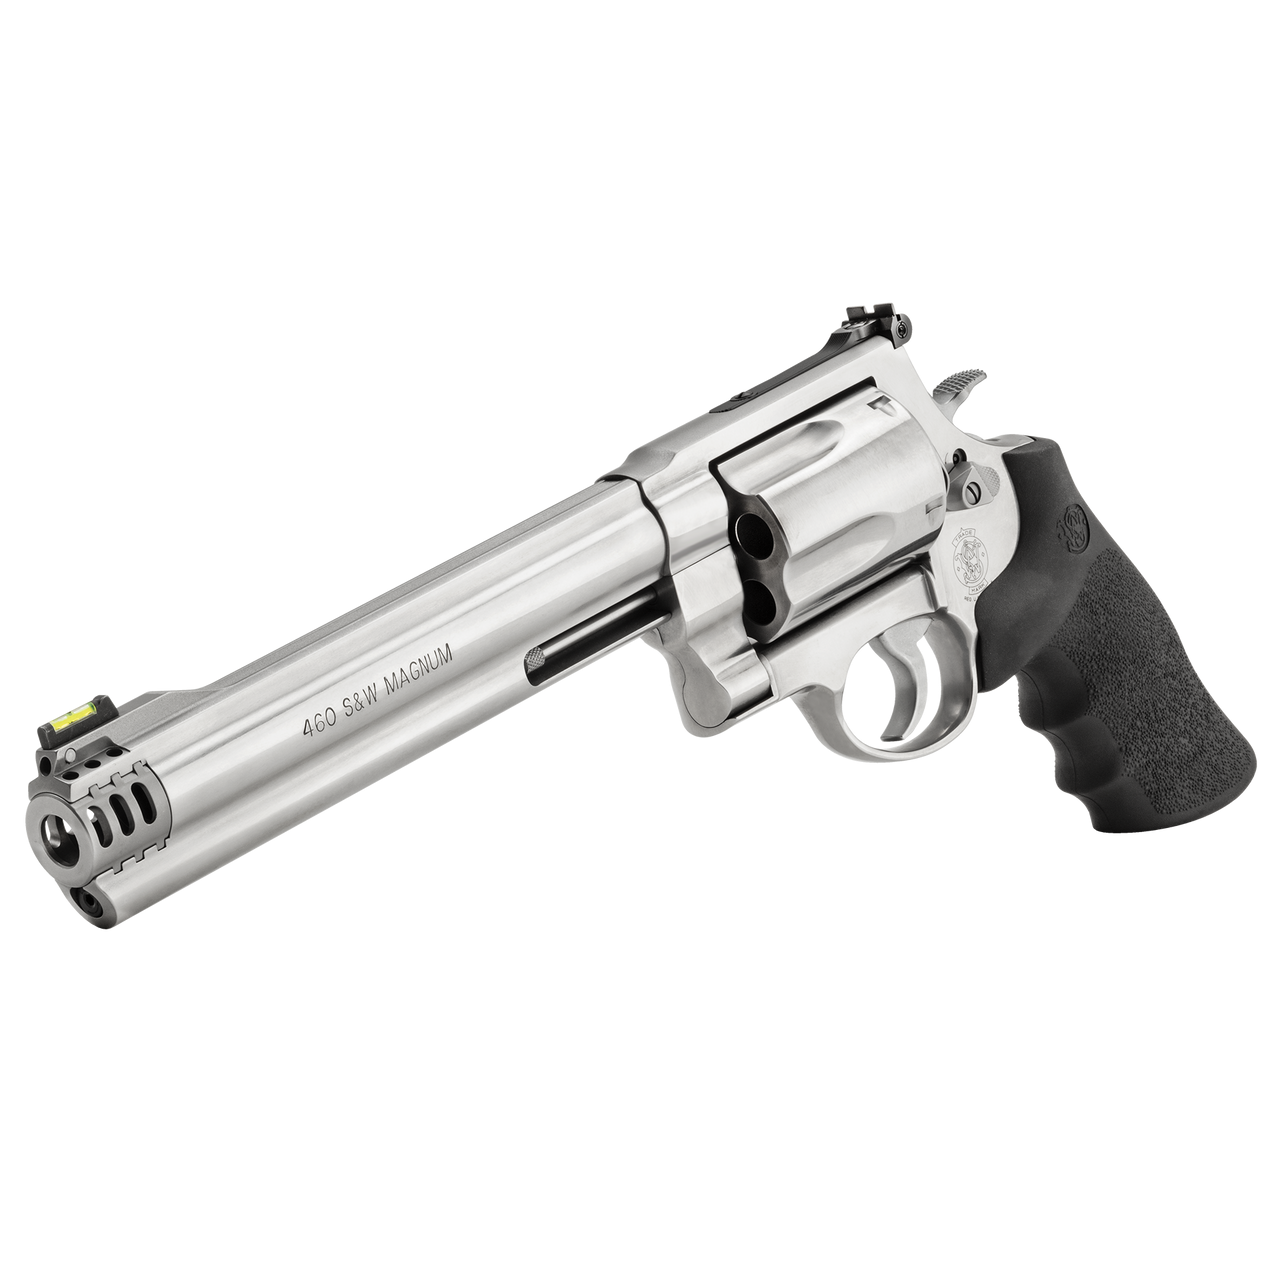 MODEL 460XVR | Smith & Wesson